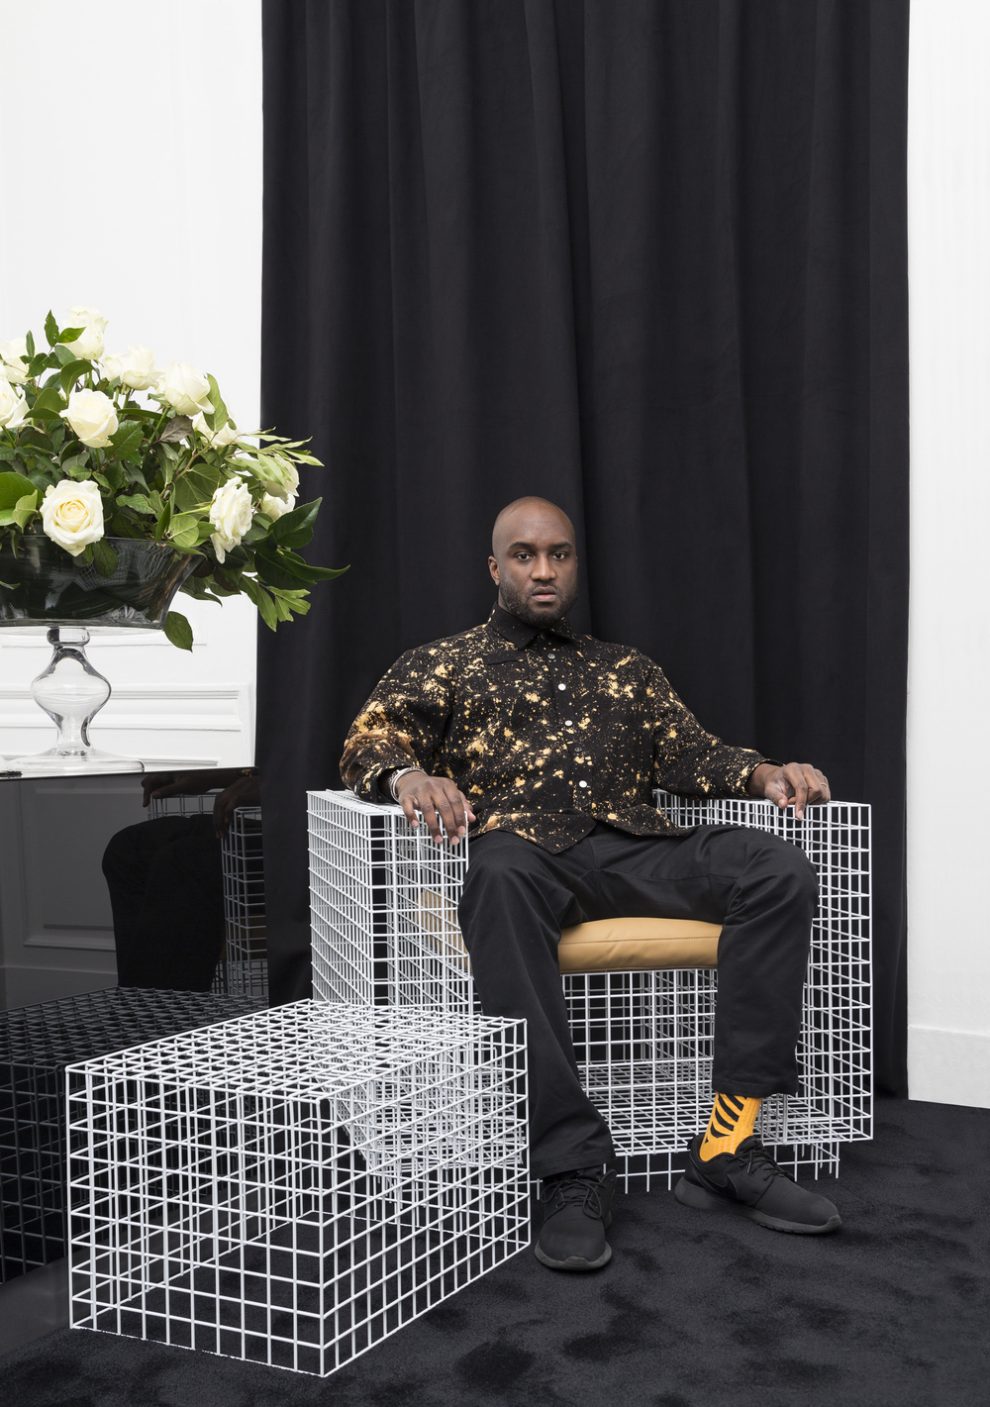 Louis Vuitton show pays tribute to designer Virgil Abloh - Taipei Times